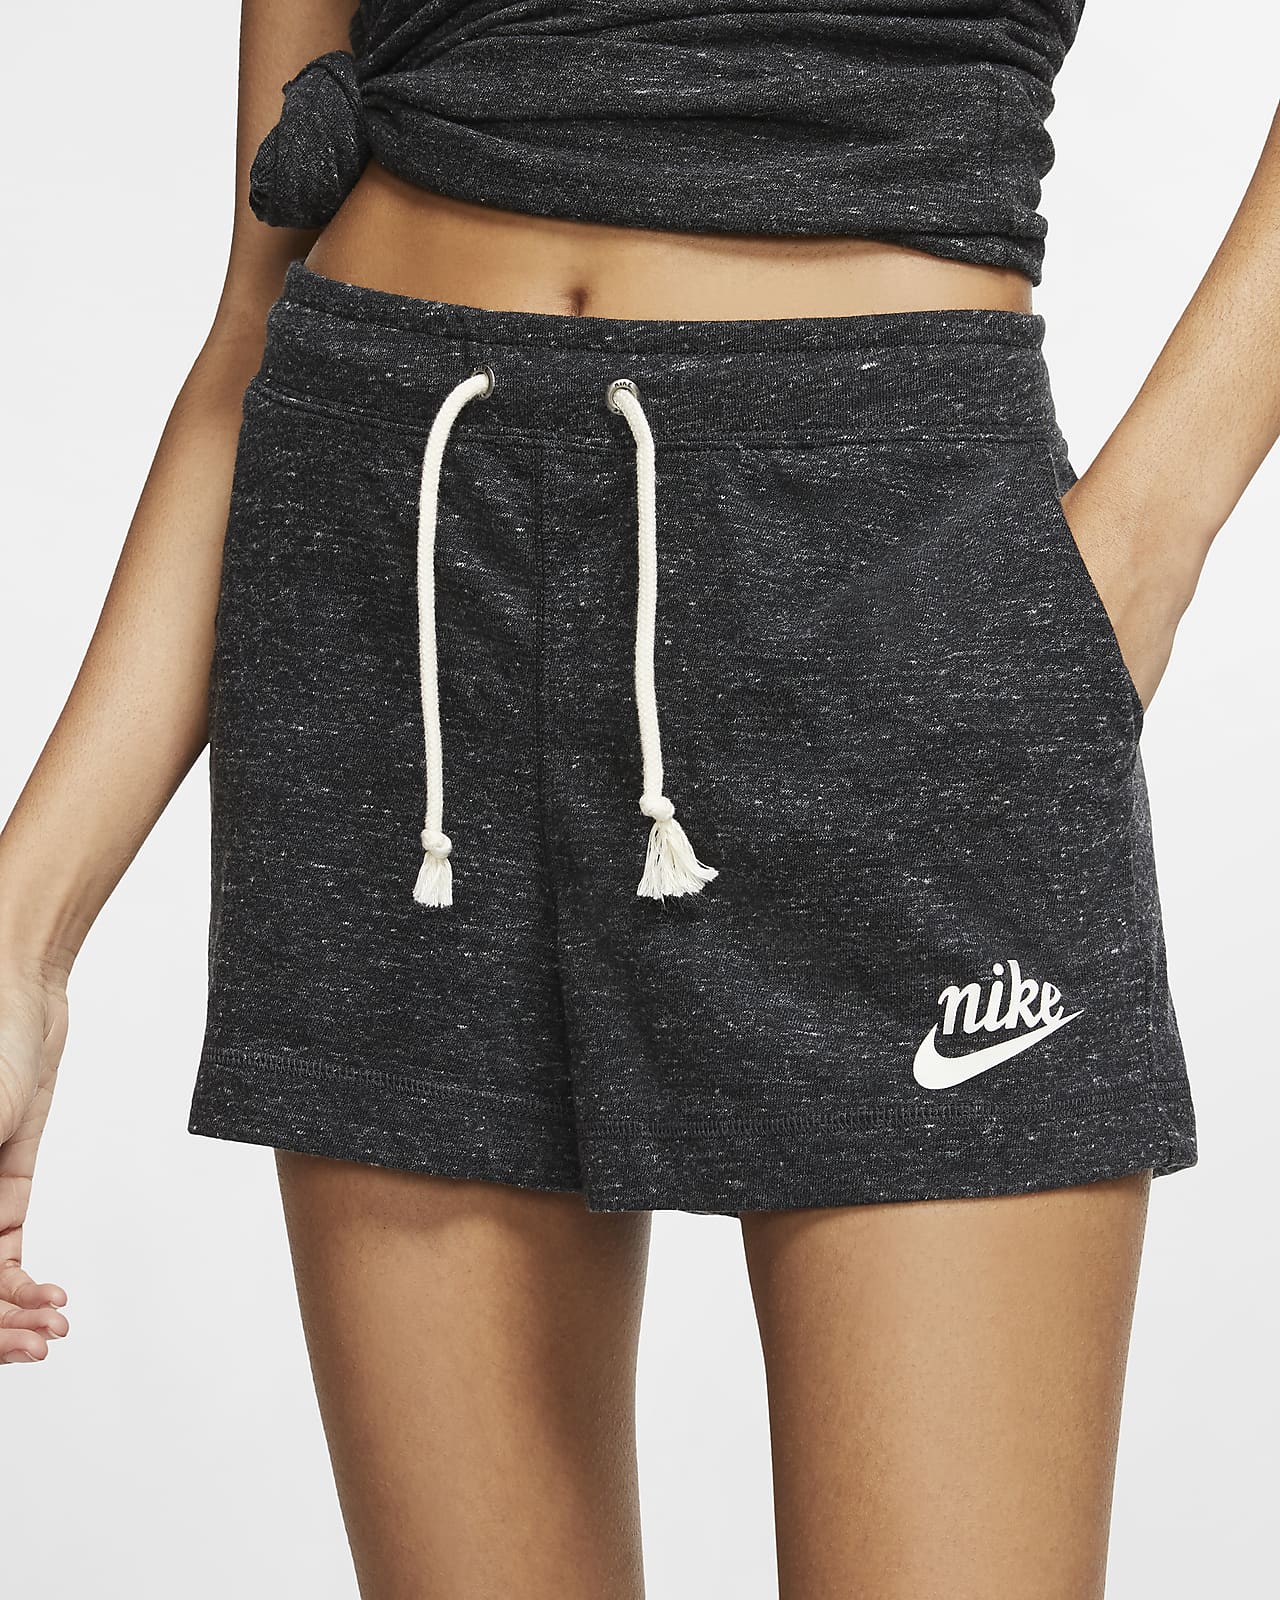 nike gray shorts womens